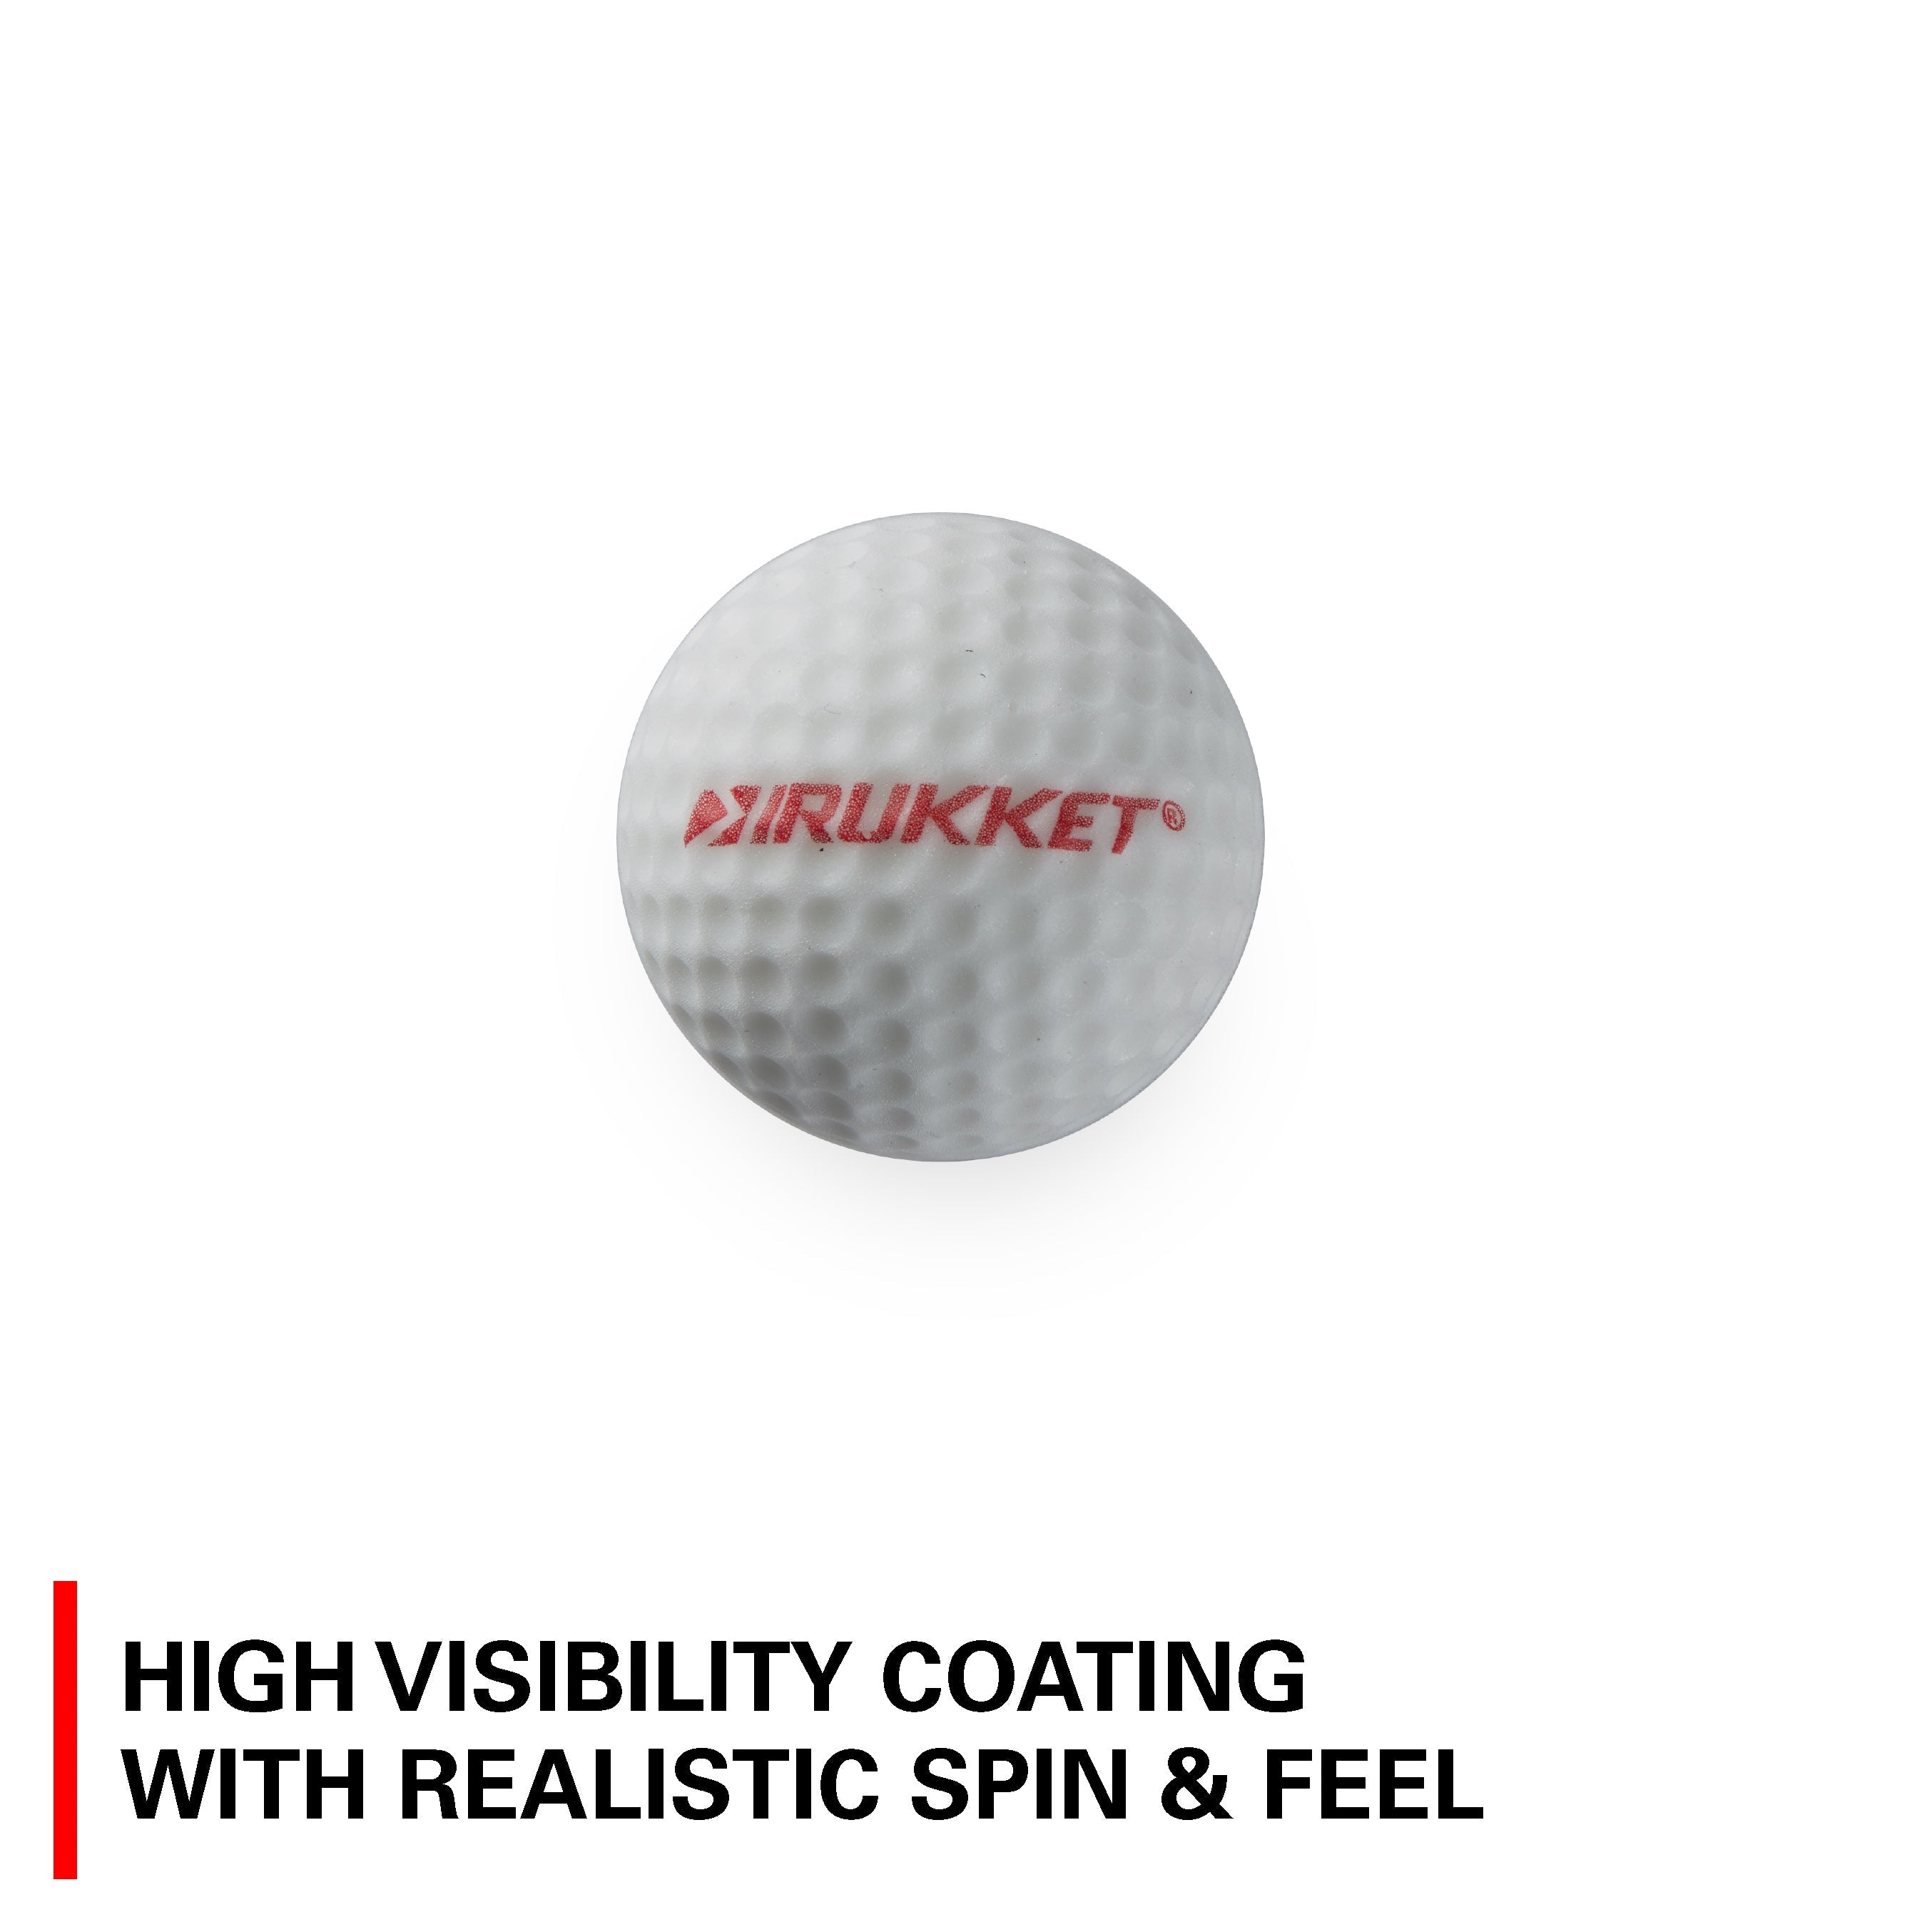 Rukket Sports Tru-Spin™ Foam Practice Golf Balls